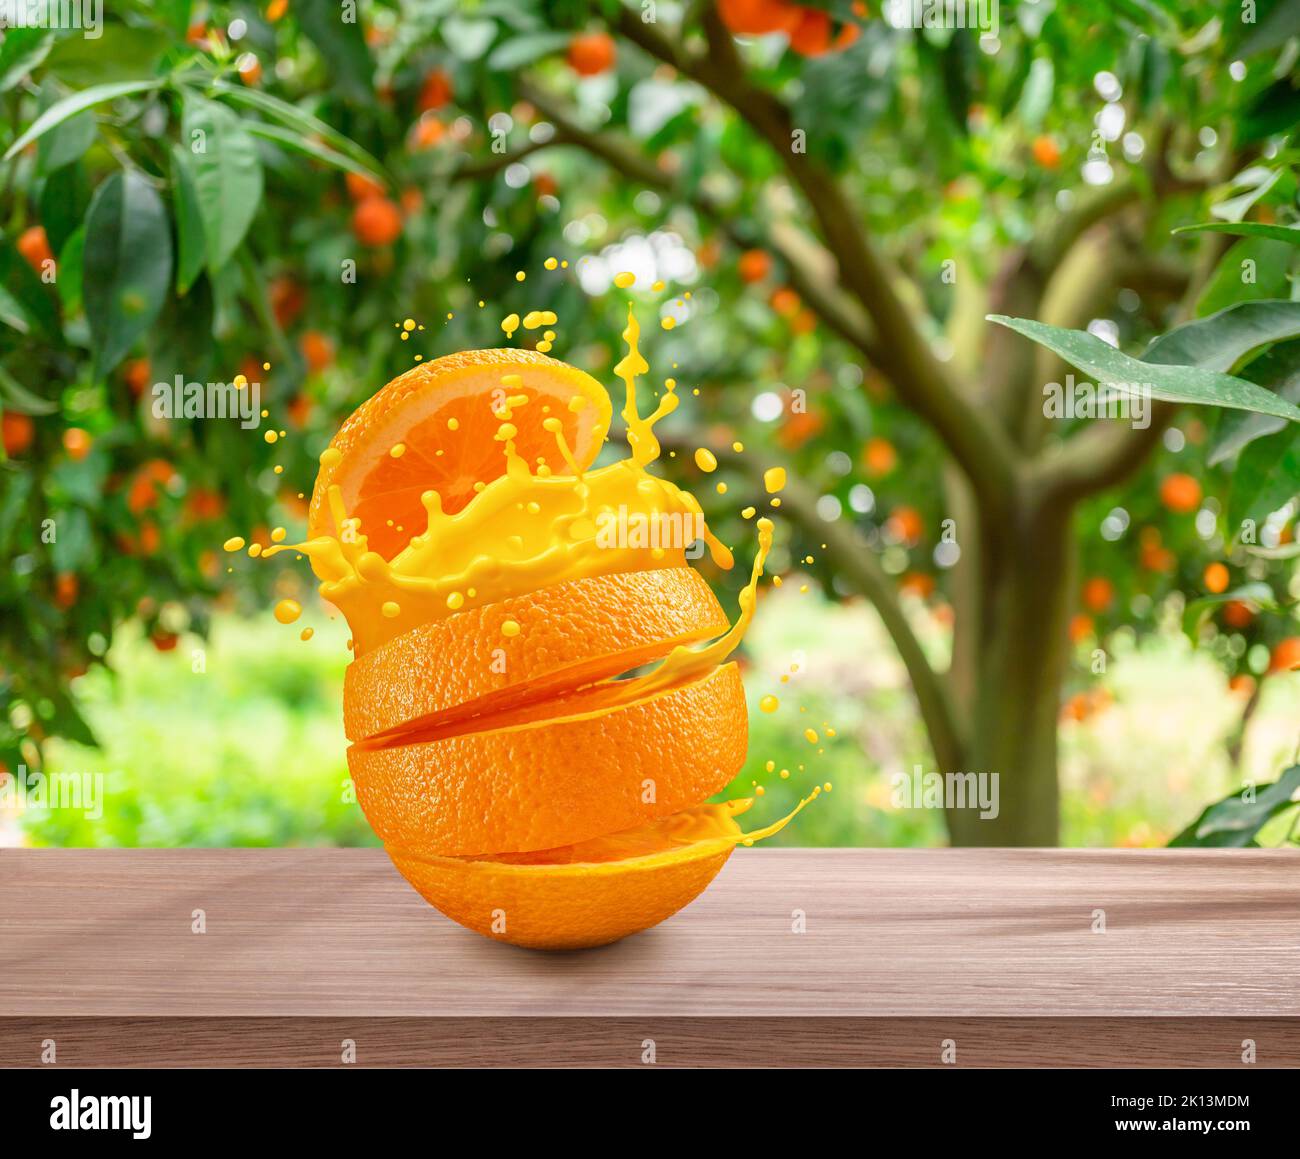 Sliced orange fruit splashing about orange juice on wooden table. Orange garden in the background. Stock Photo